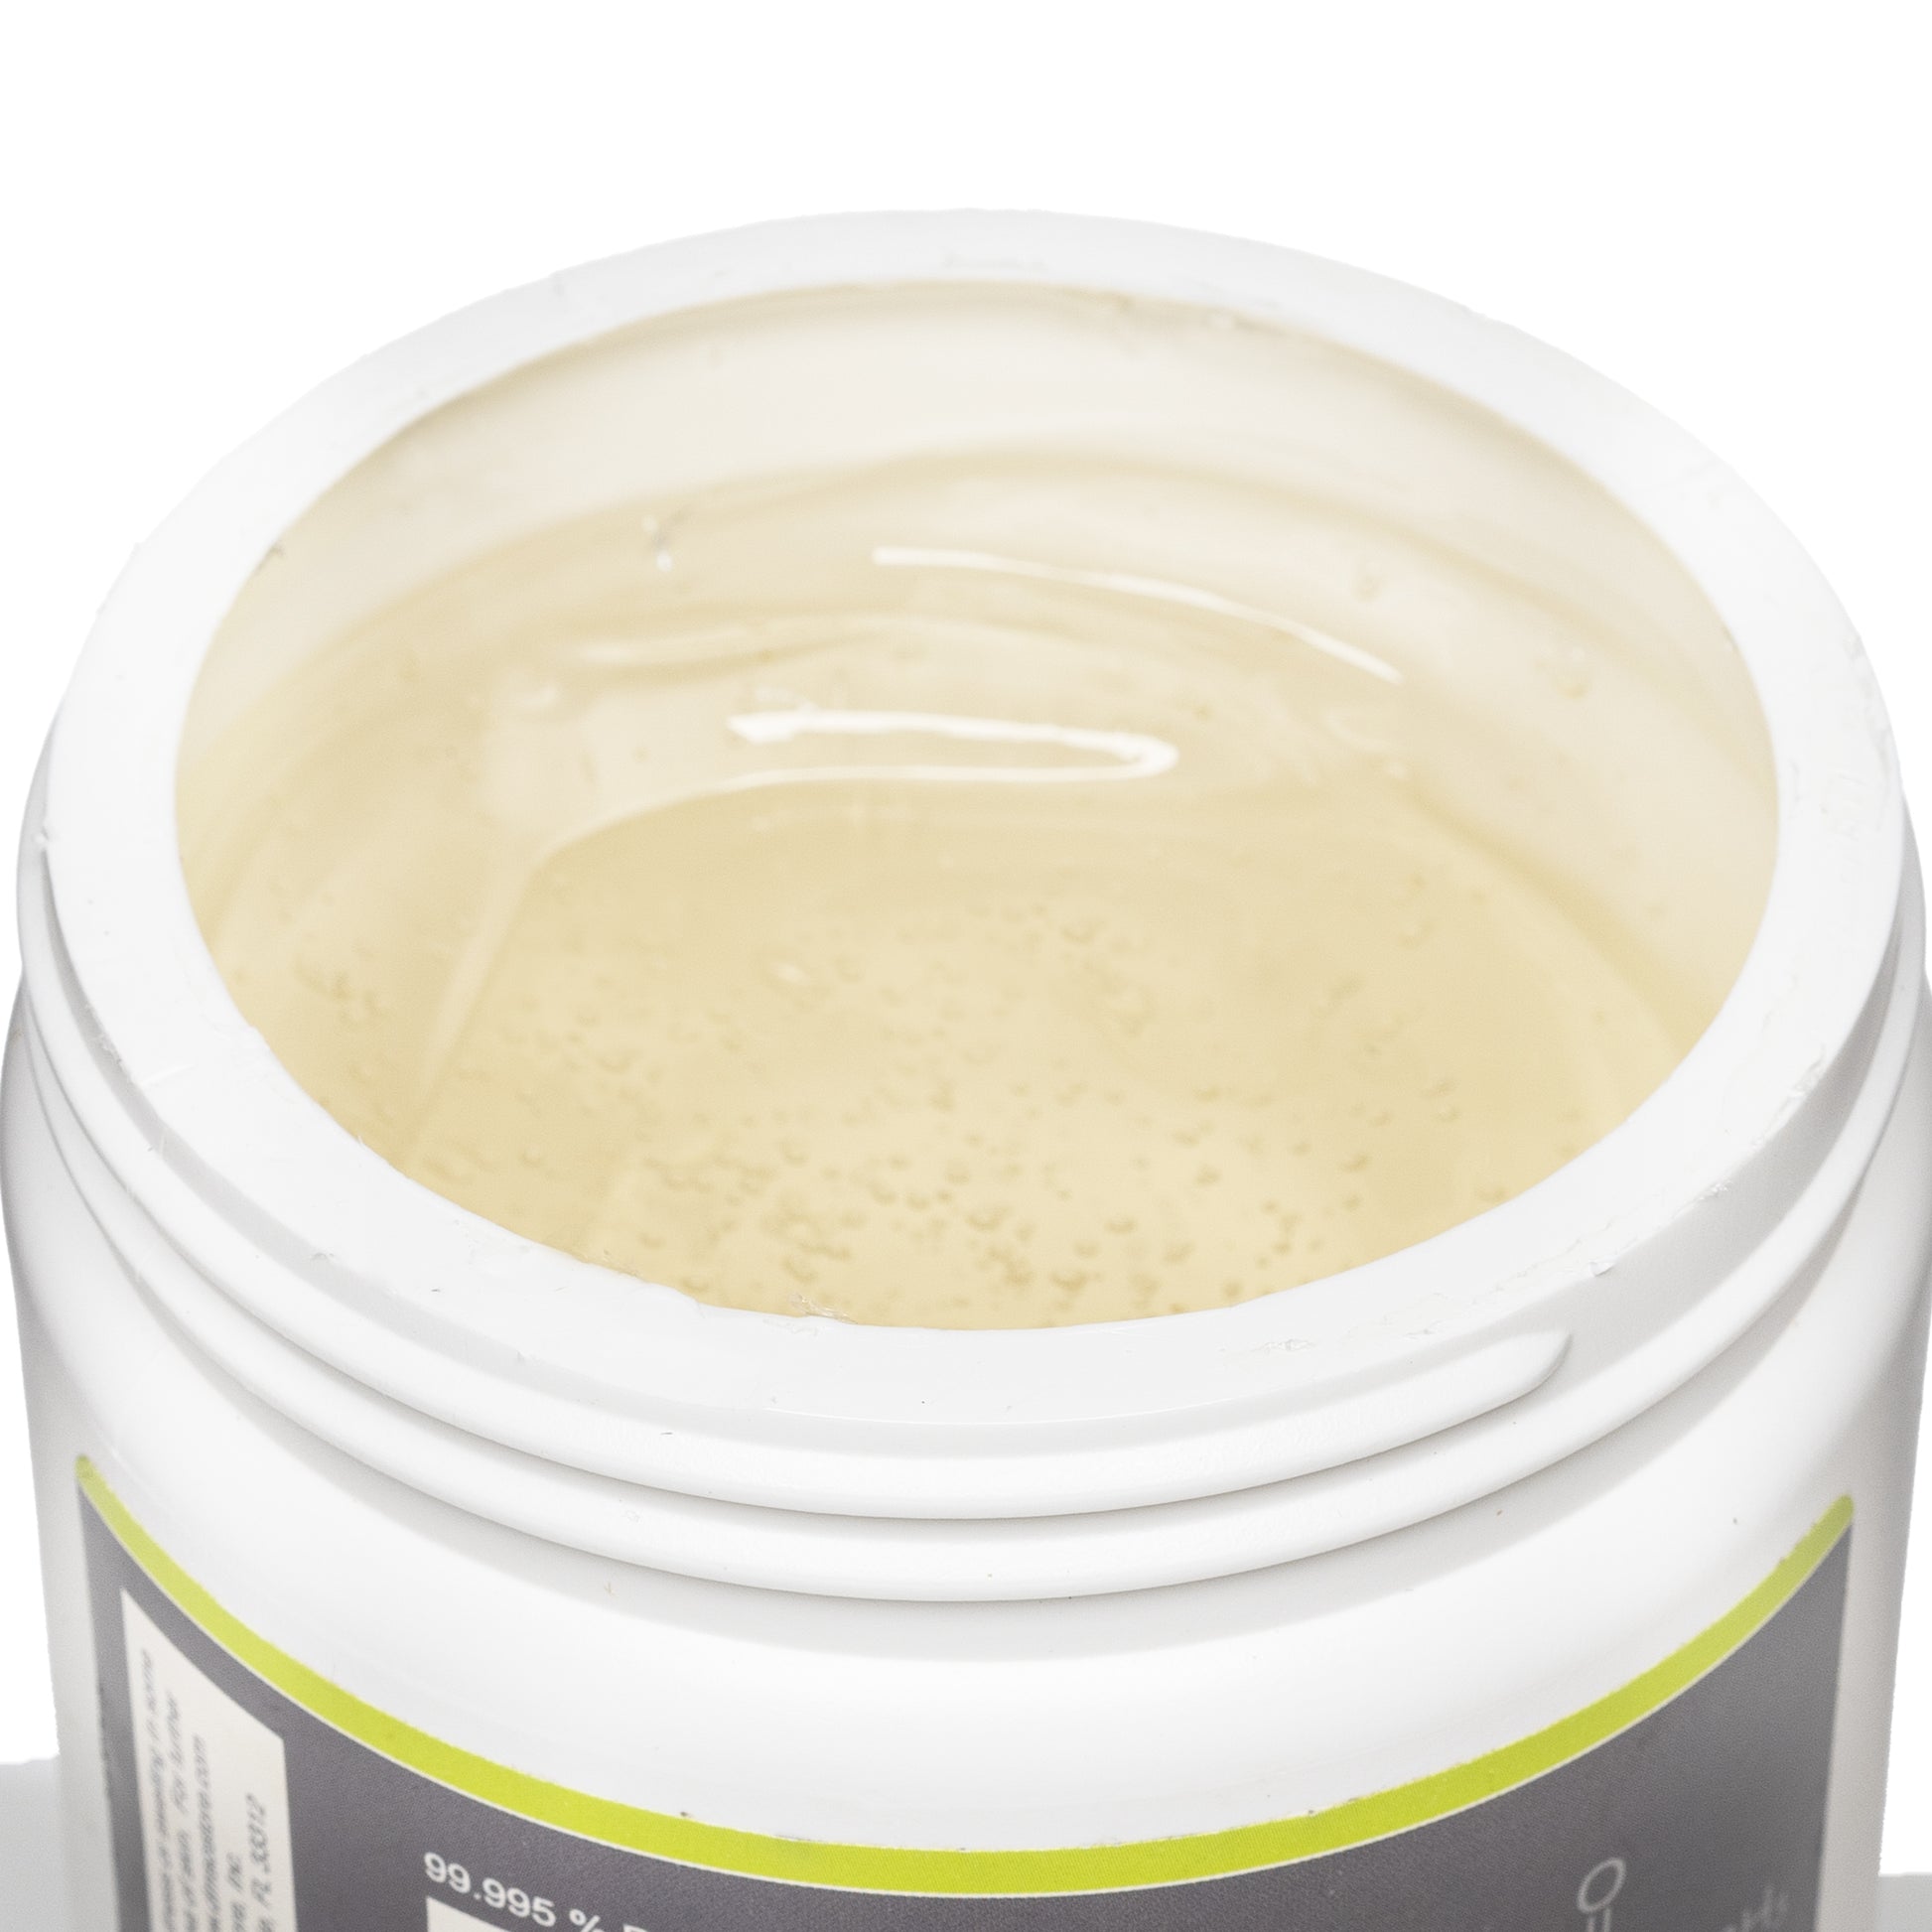 DMSO-gel-99.995-pure-dimethyl-sulfoxide-knee-pain-jar-opened. Opened view of the 16 oz medi gel jar. Contents revealed is the medi gel product.